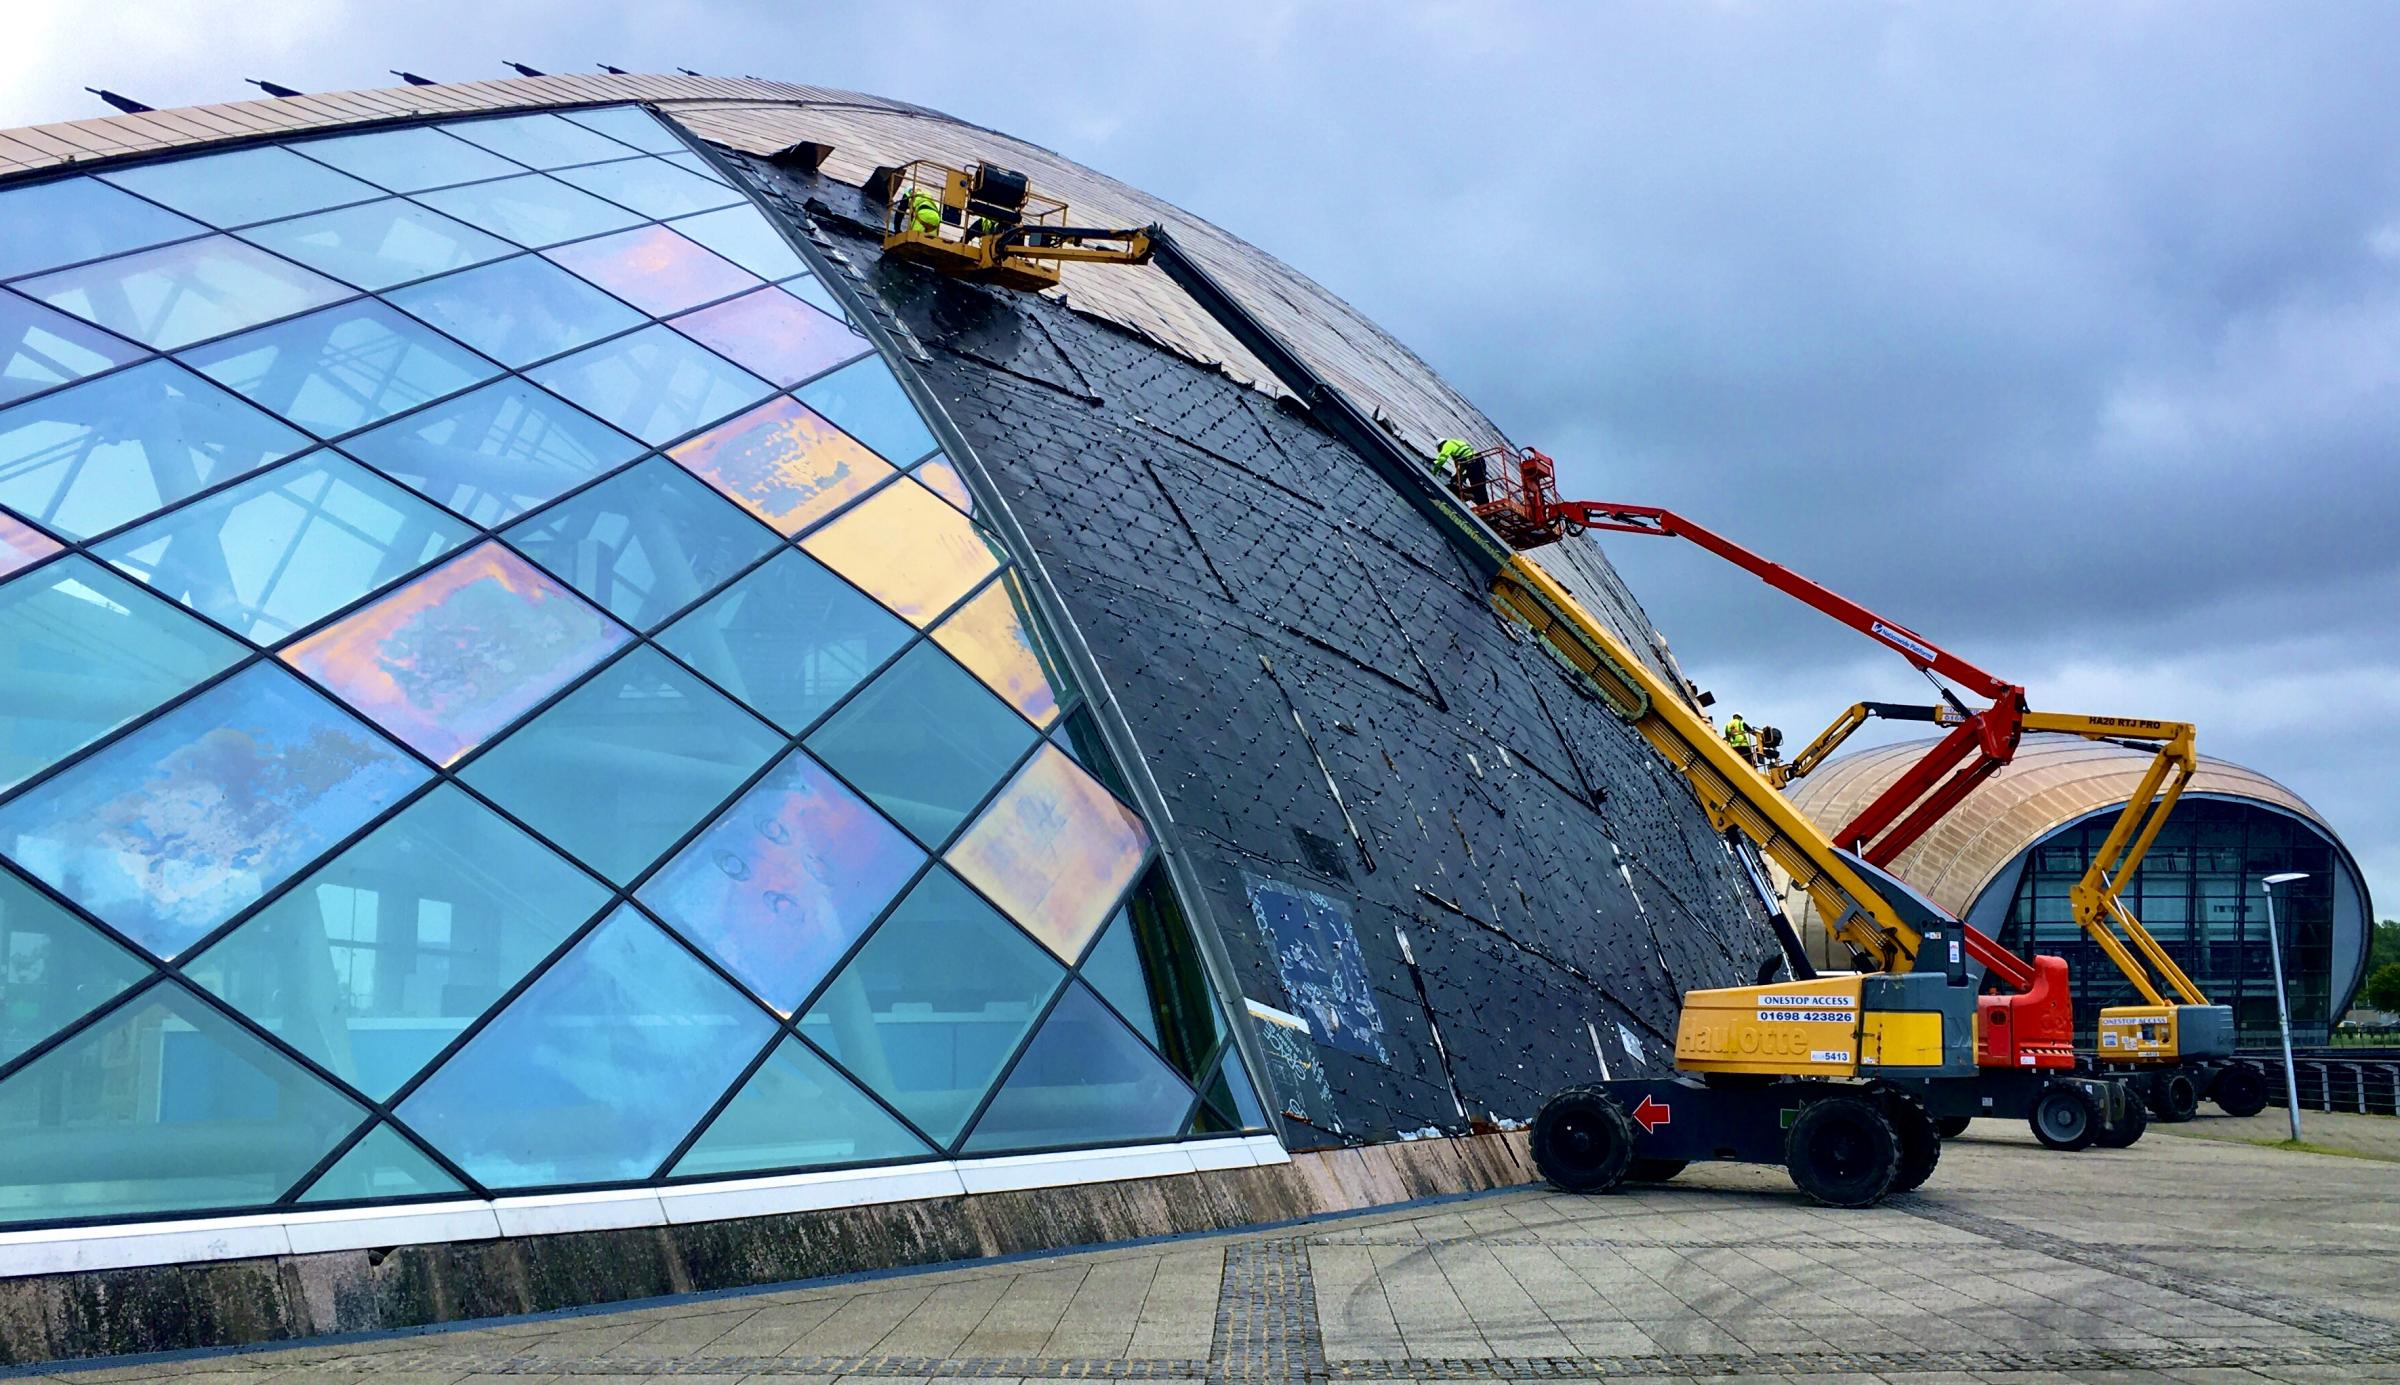 Glasgow Science Centre's melting roof set upgrade in £5.5m makkeover plan